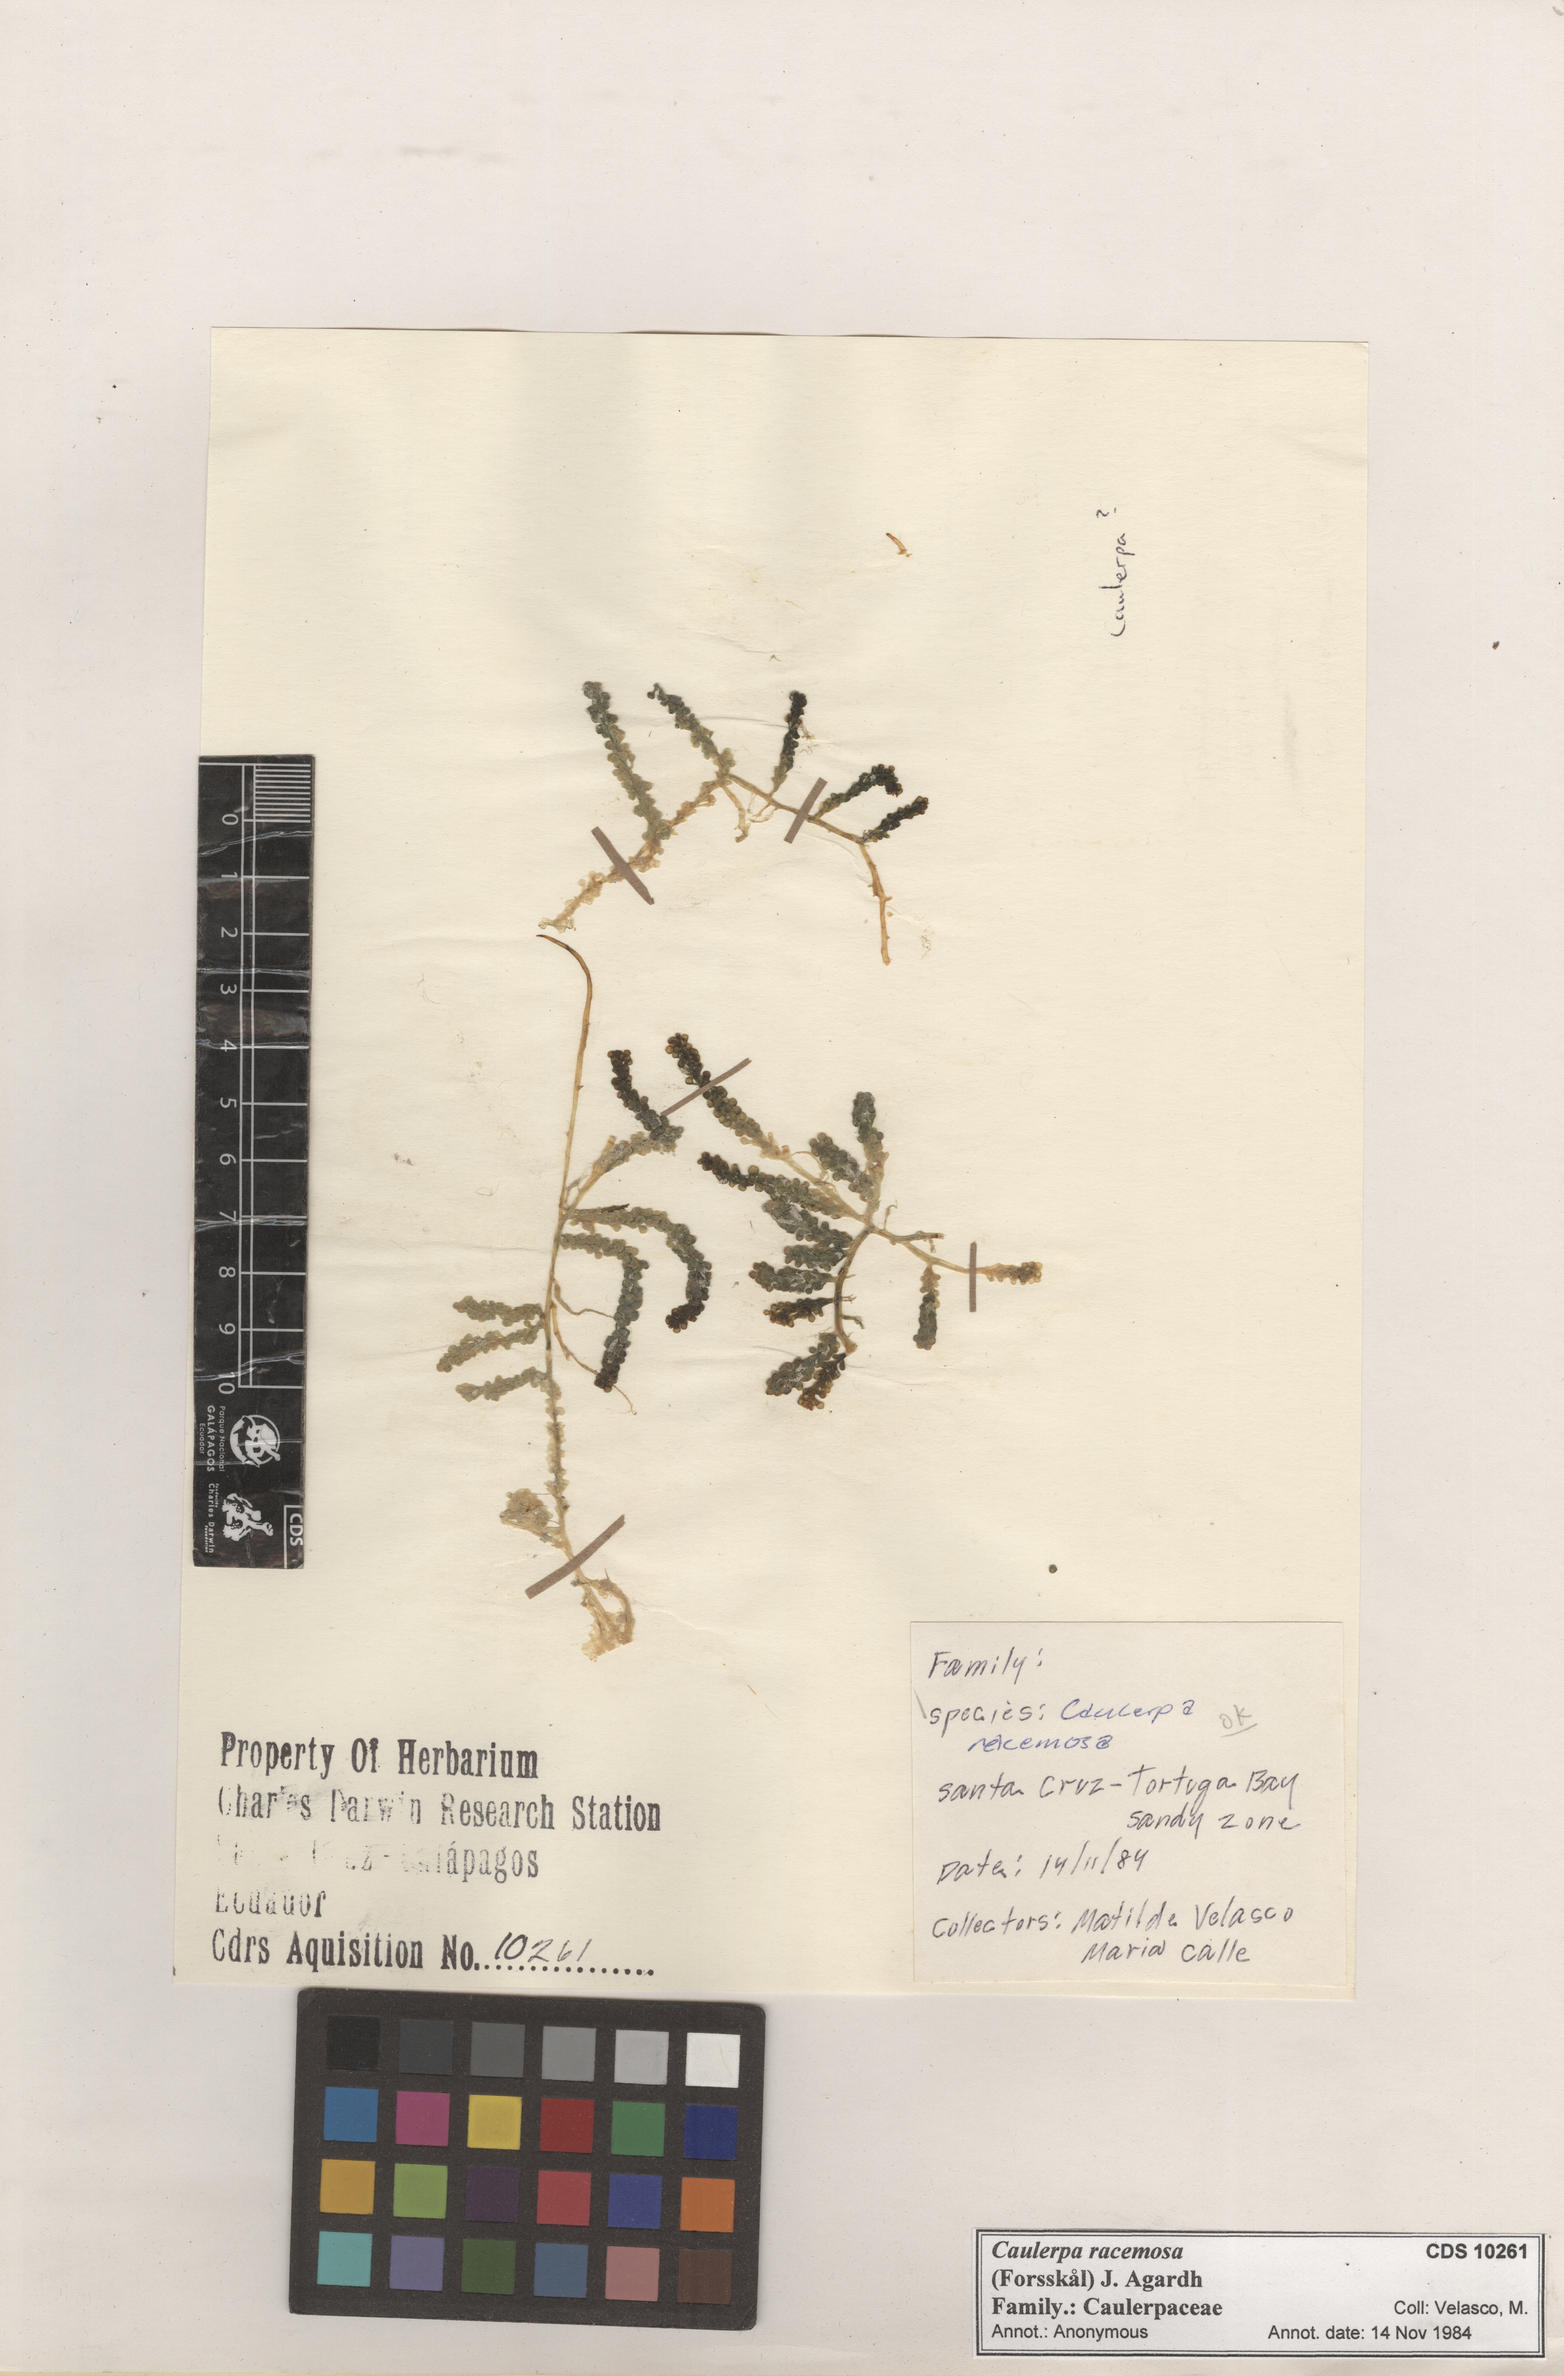  Caulerpa racemosa , CDS specimen herbarium. Photo: Bravo, L..